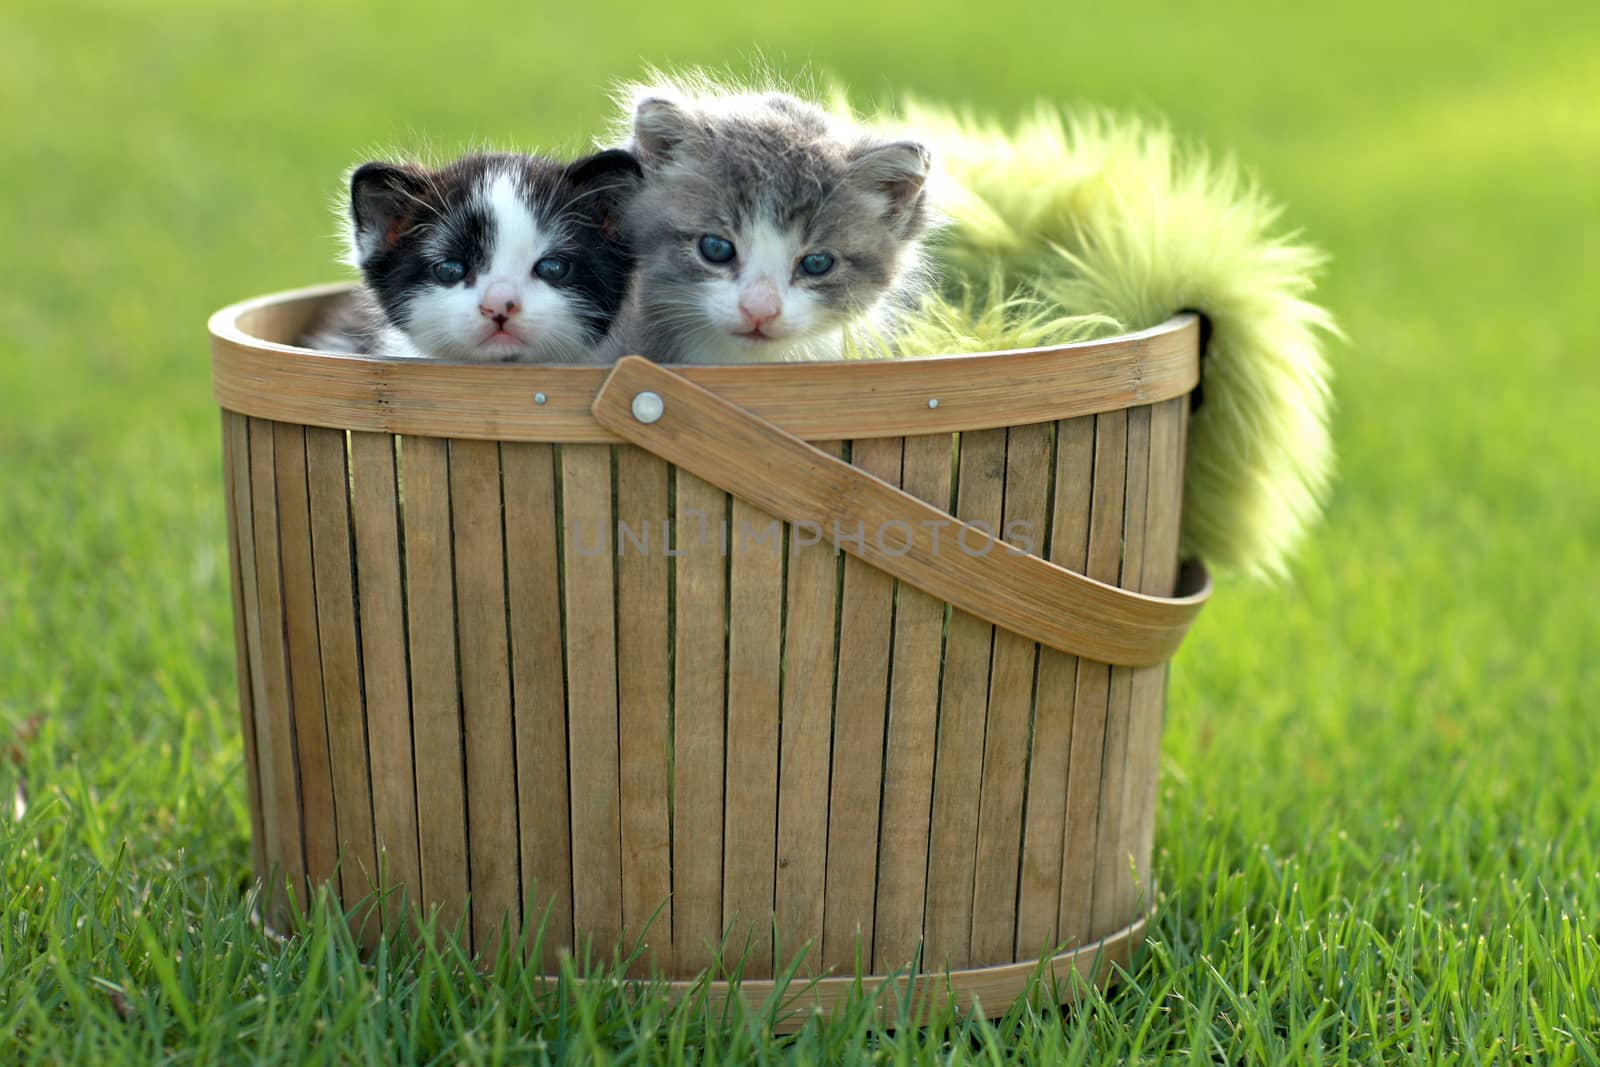 Cute Little Kittens Outdoors in Natural Light